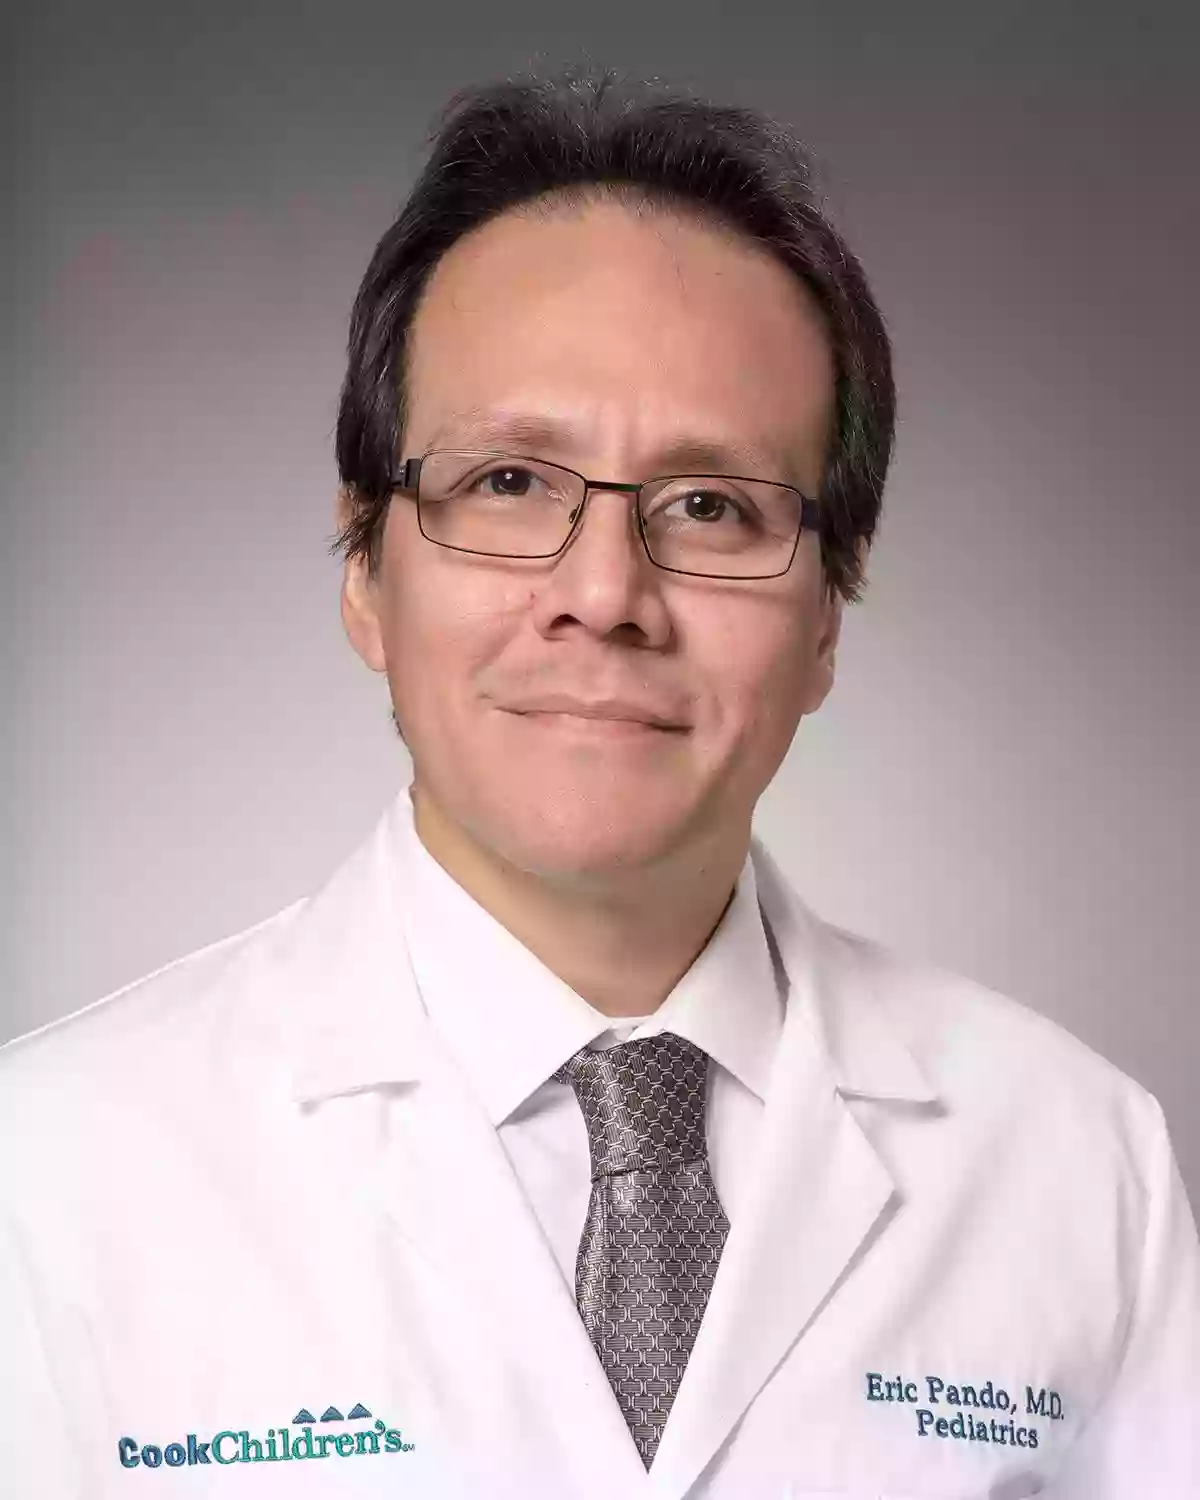 Dr. Eric Pando